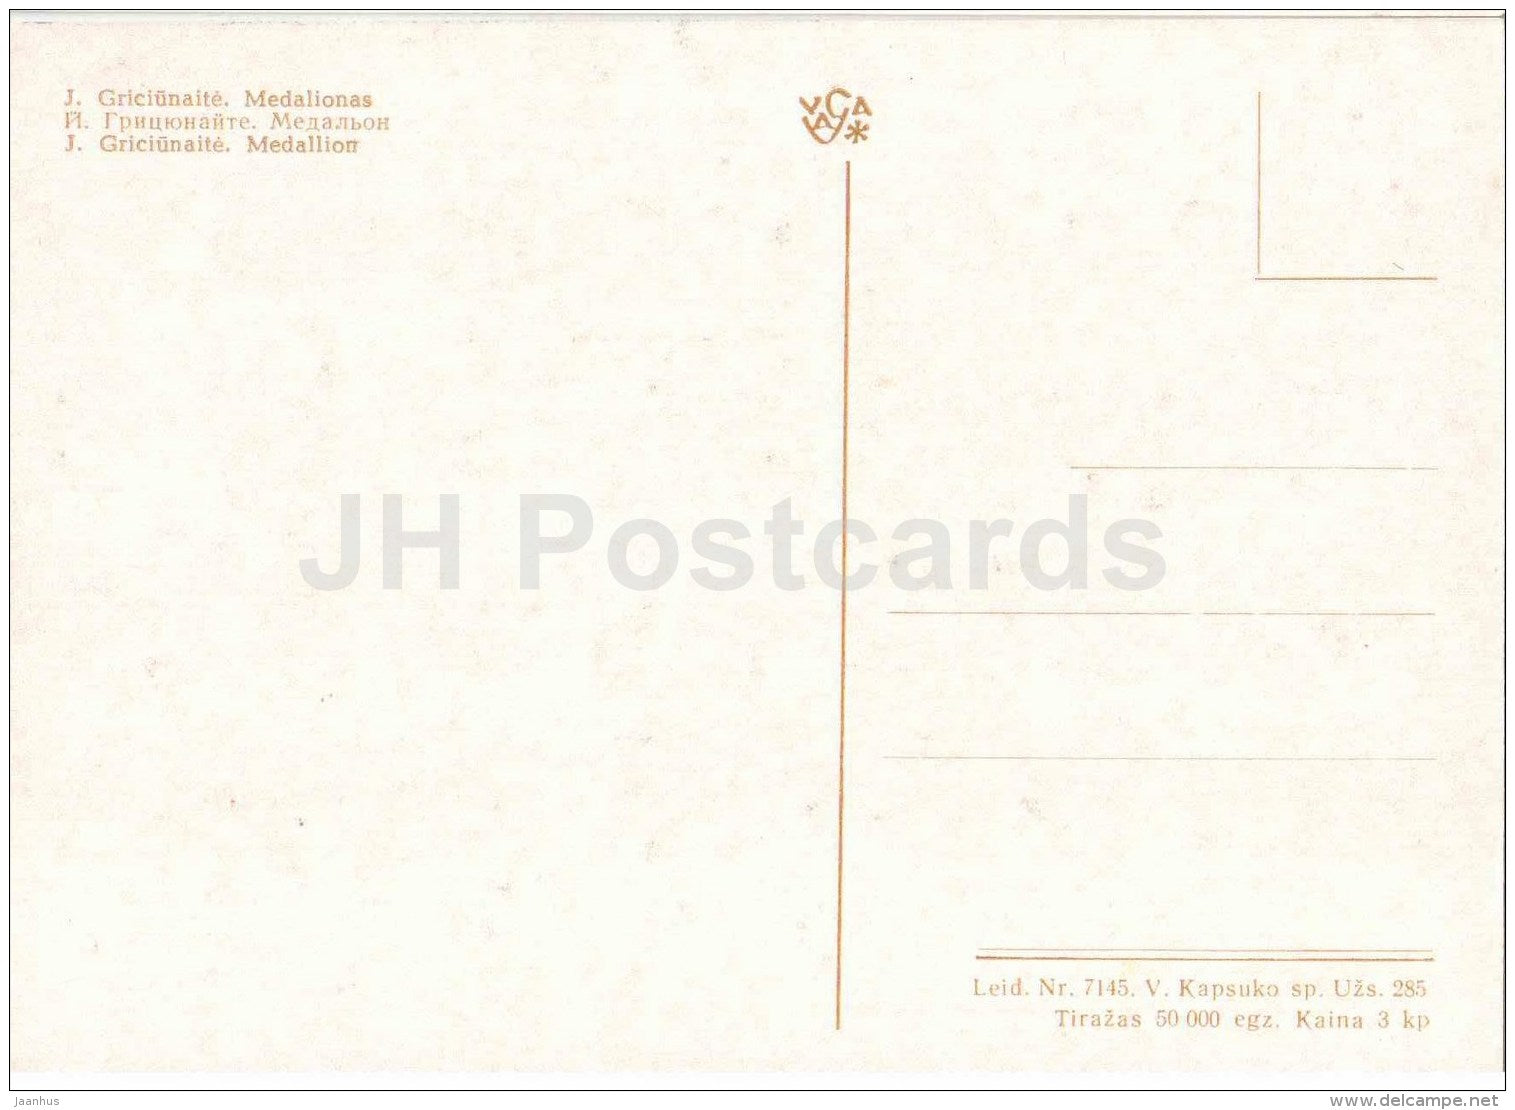 Medallion by J. Griciunaite - art - Amber - Gintaras - 1973 - Lithuania USSR - unused - JH Postcards